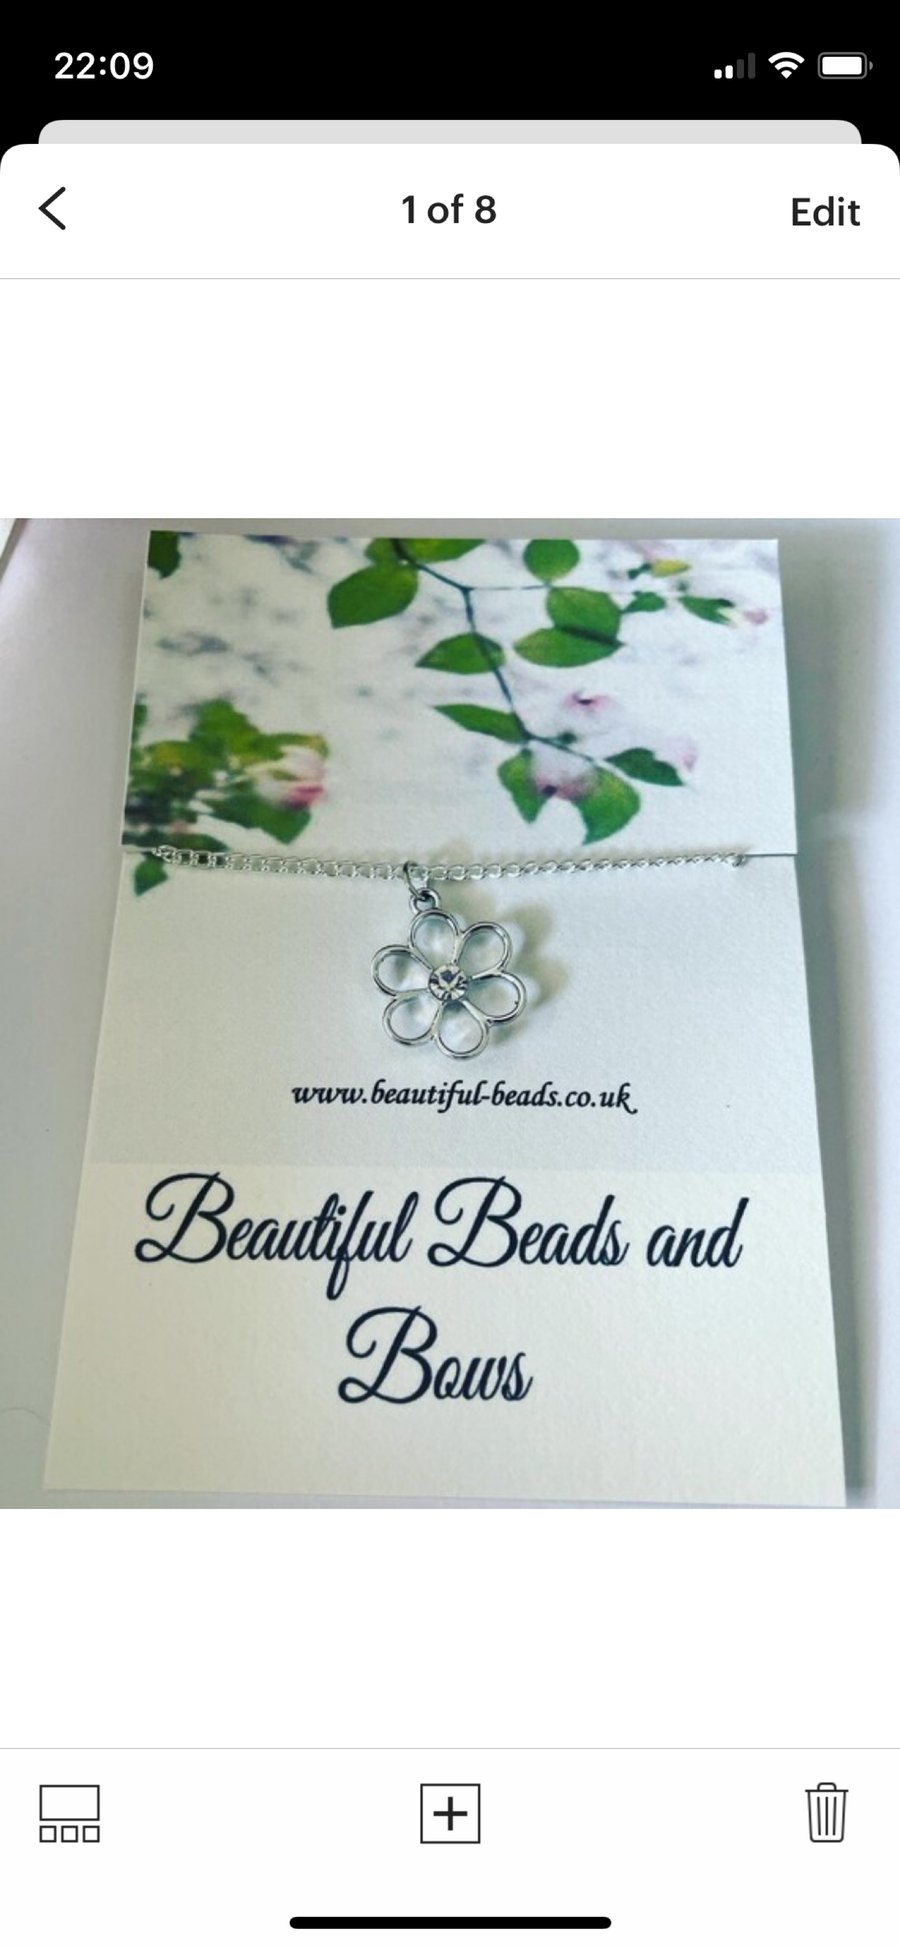 Flower rhinestone pendant charm necklace 16 inches curb chain silvertone 